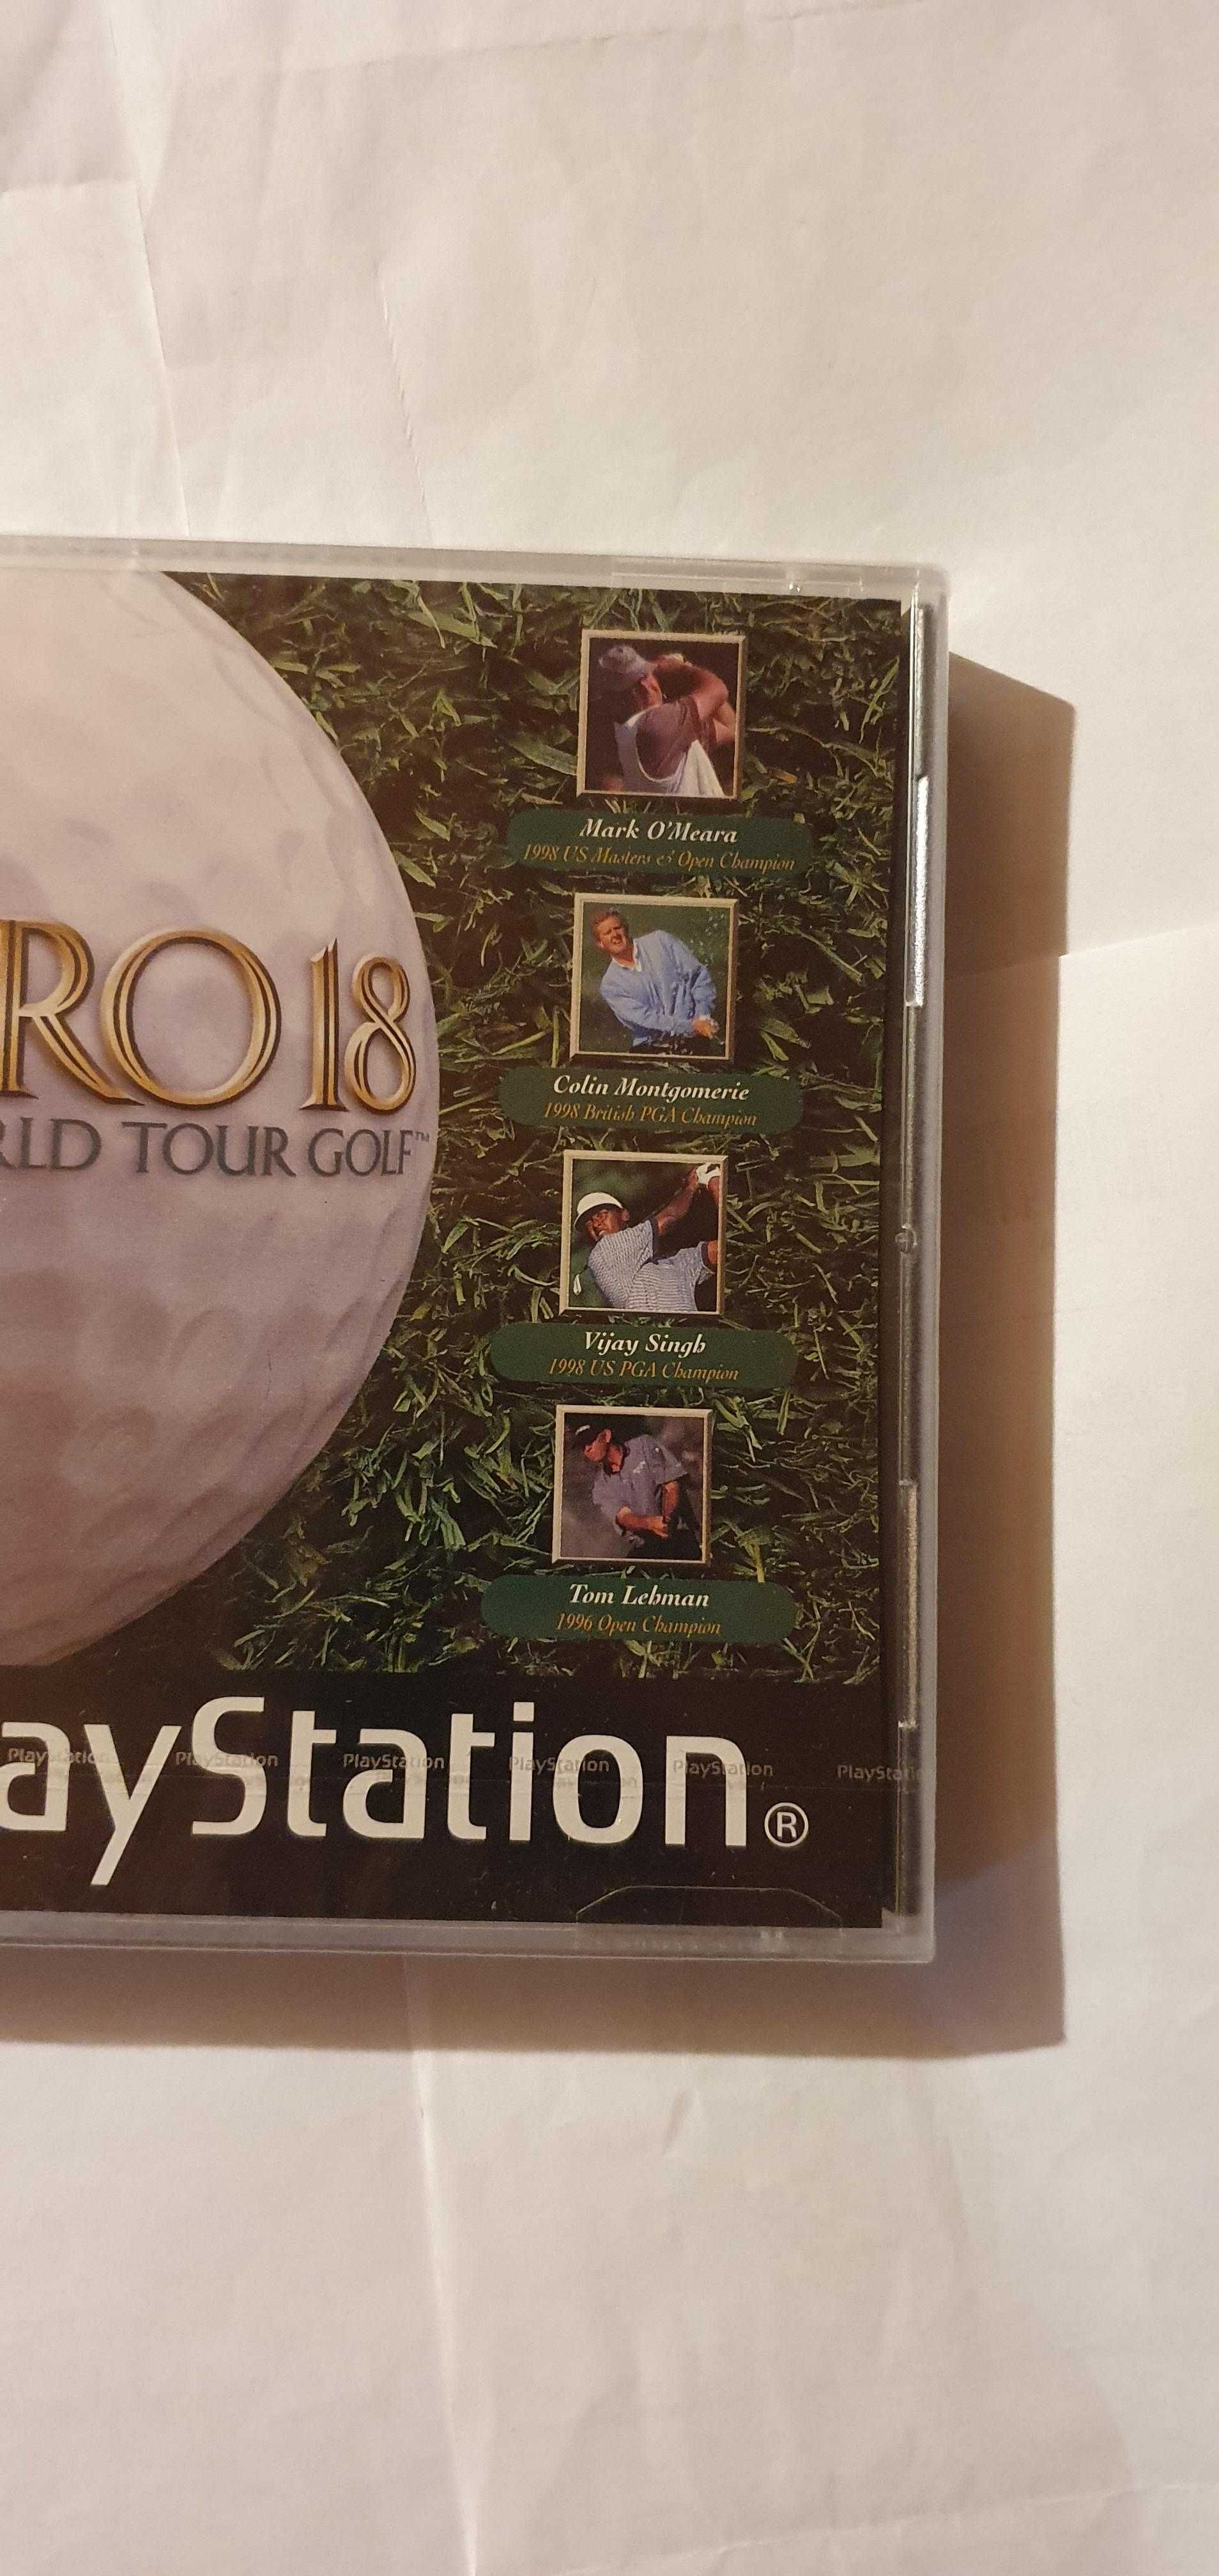 Pro 18 World Tour Golf (Selado) Playstation 1 PAL Jogo ps1 psx psone